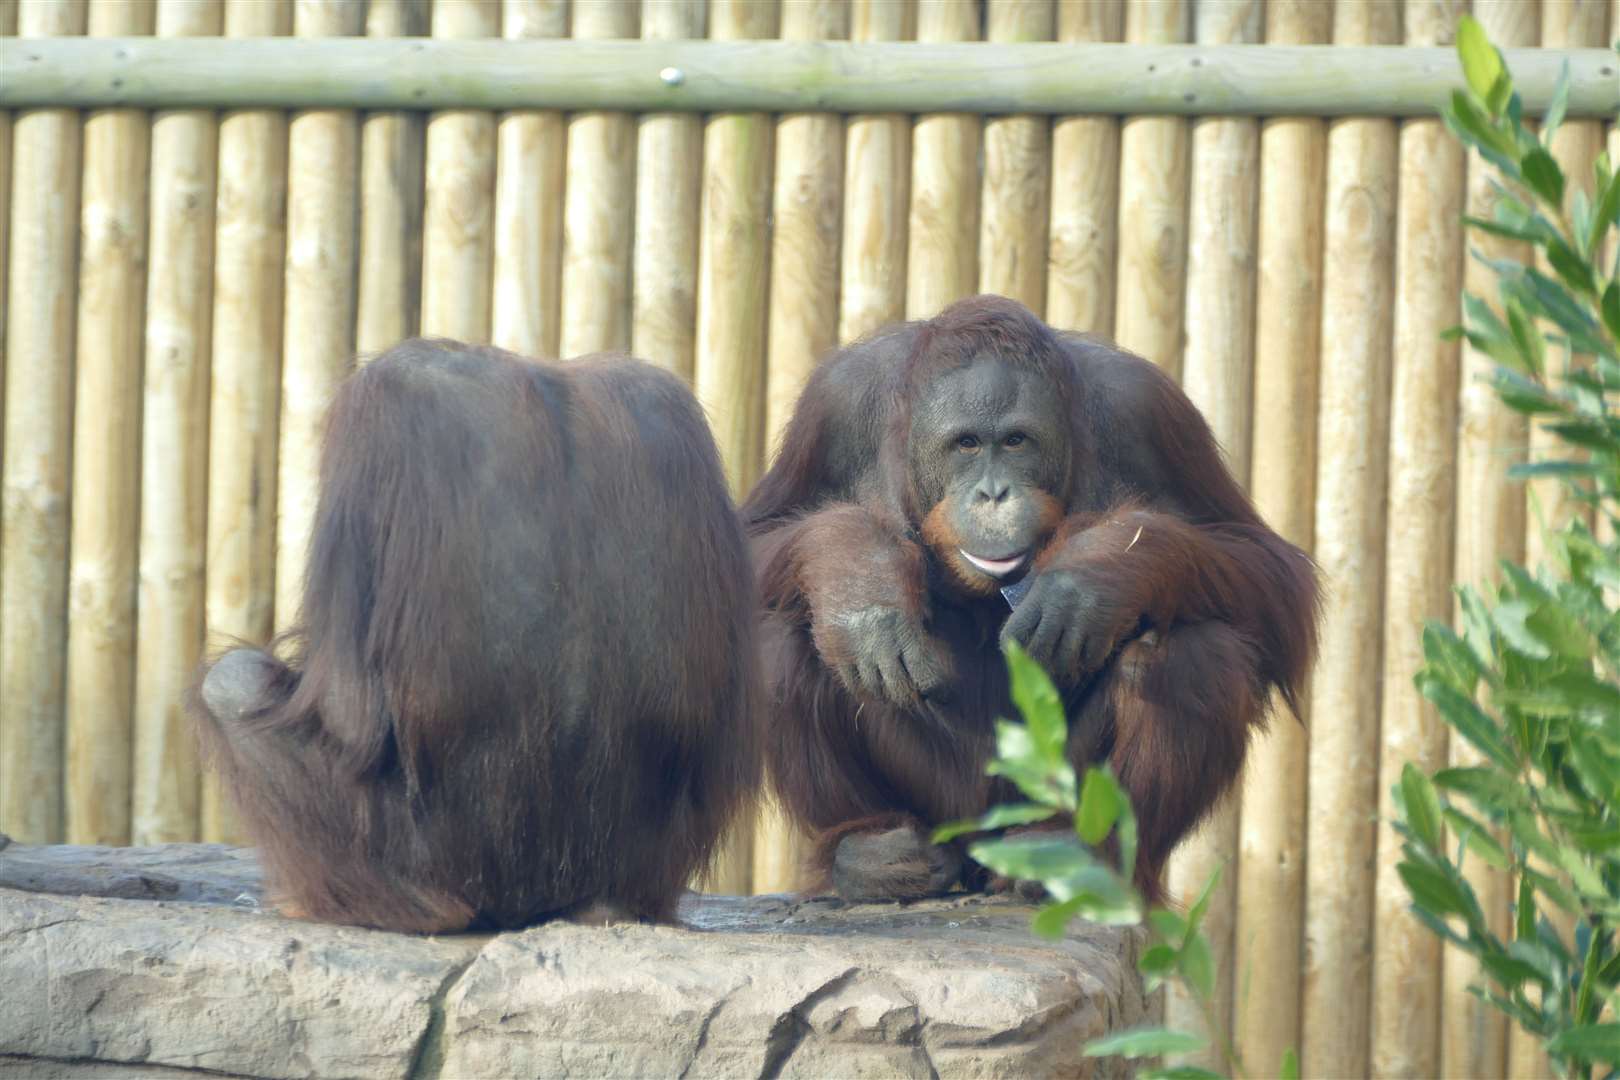 Dayak was one of four orangutans at Wingham. Picture: Simon Willis